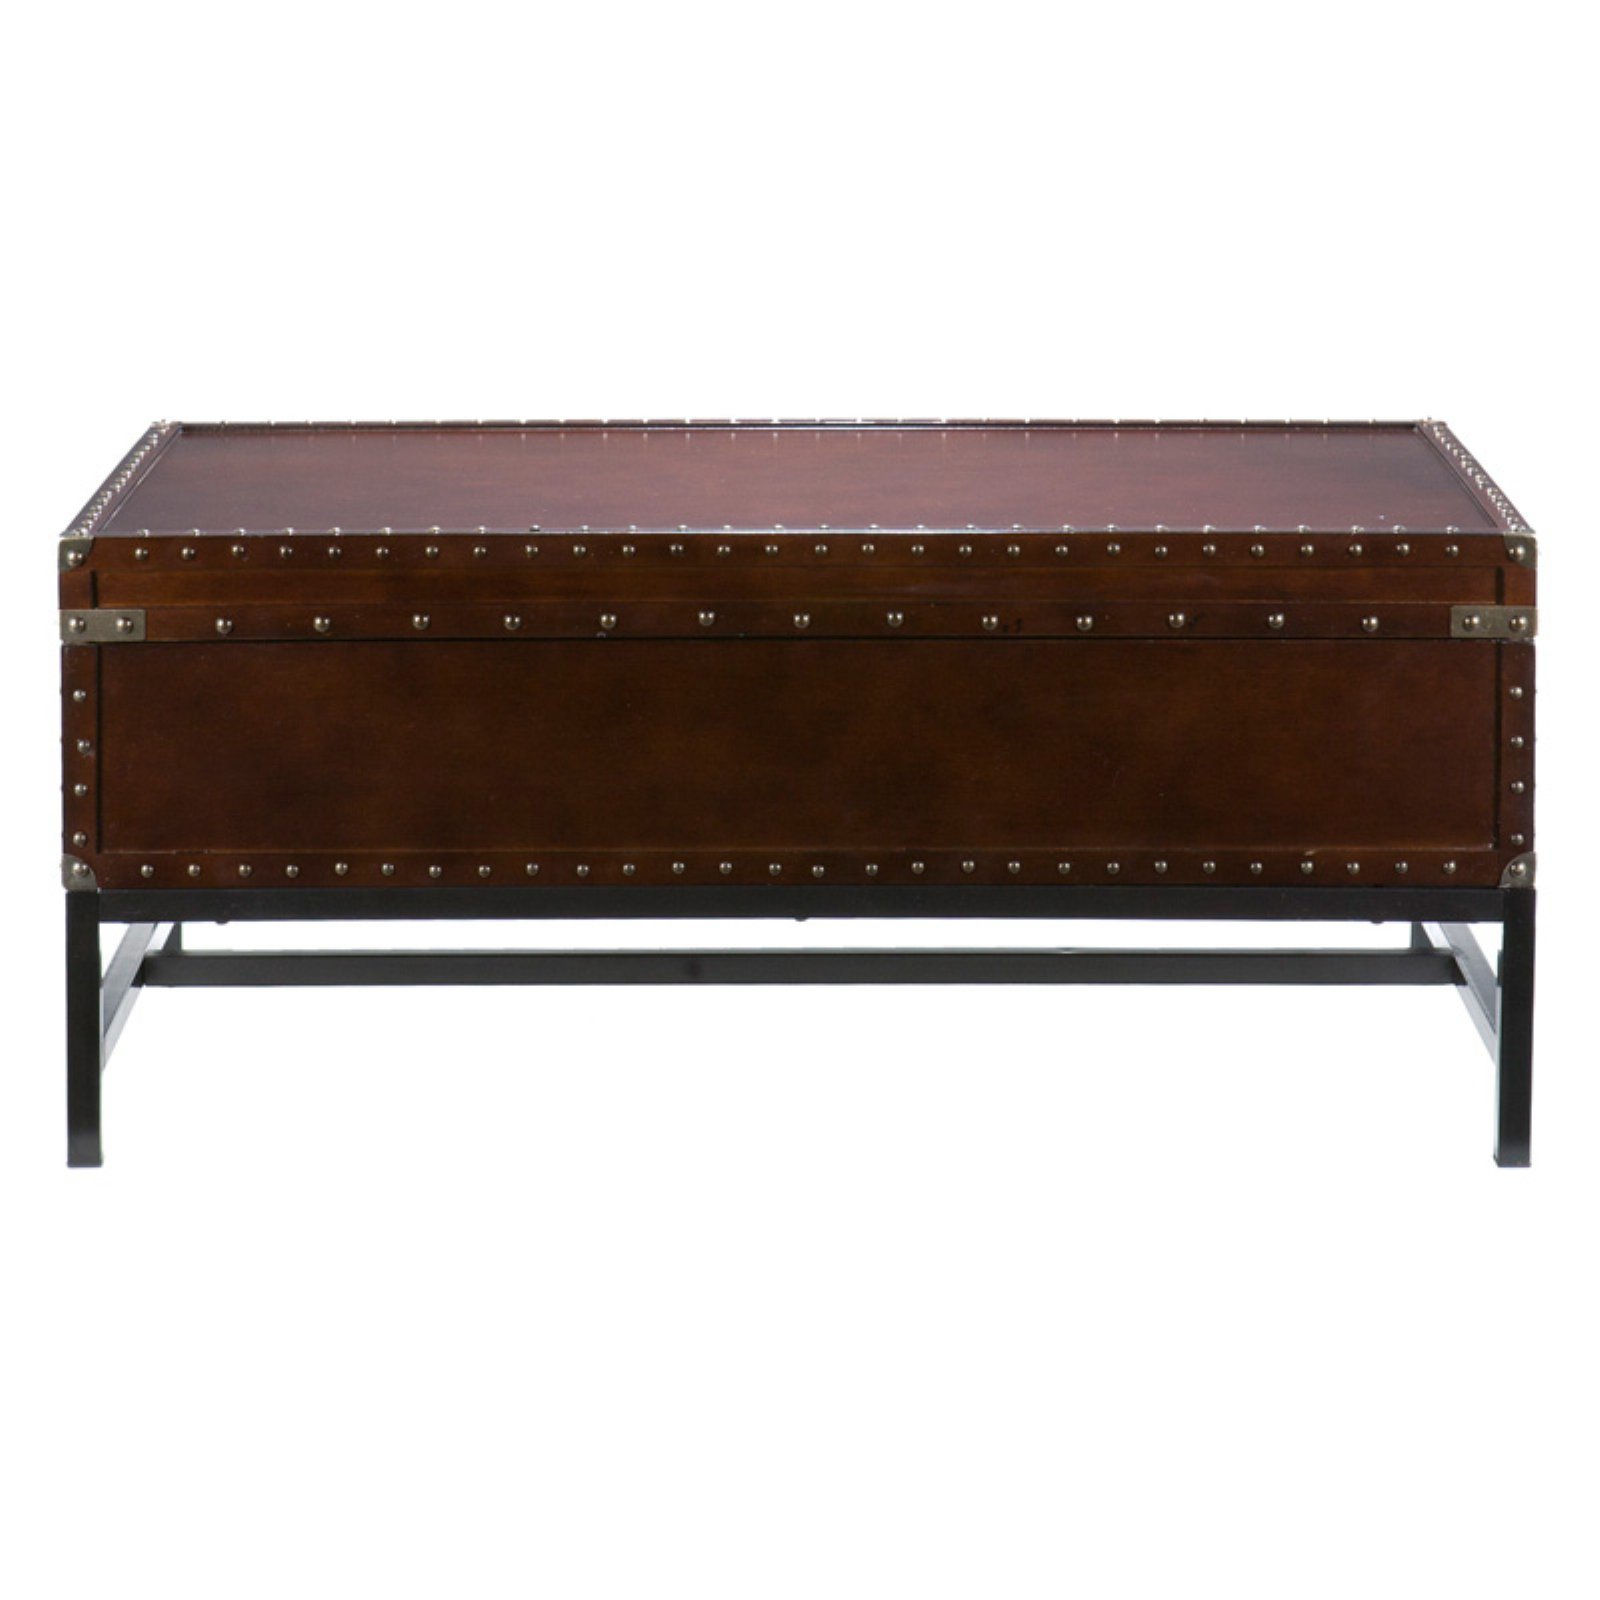 SEI Furniture Voyager Storage Coffee Table in Espresso - image 2 of 5